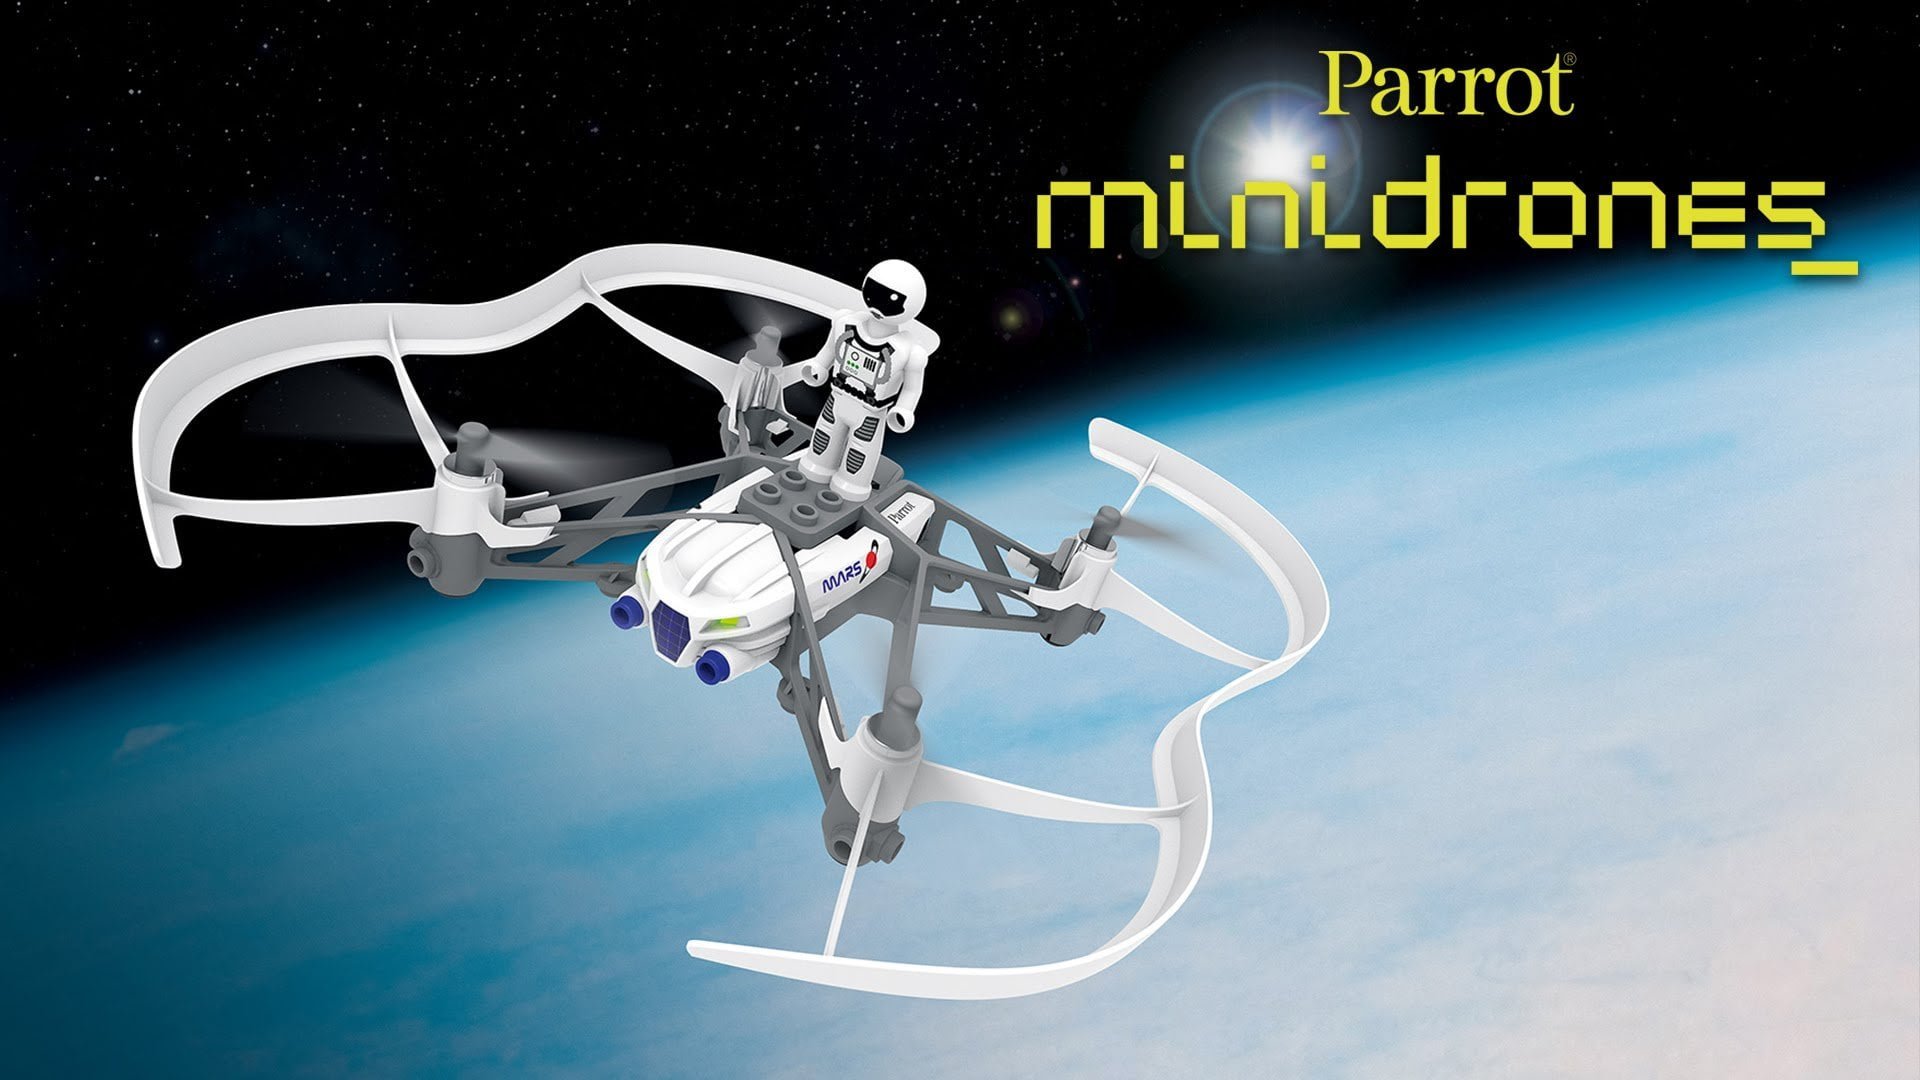 Parrot cargo minidrone Mars